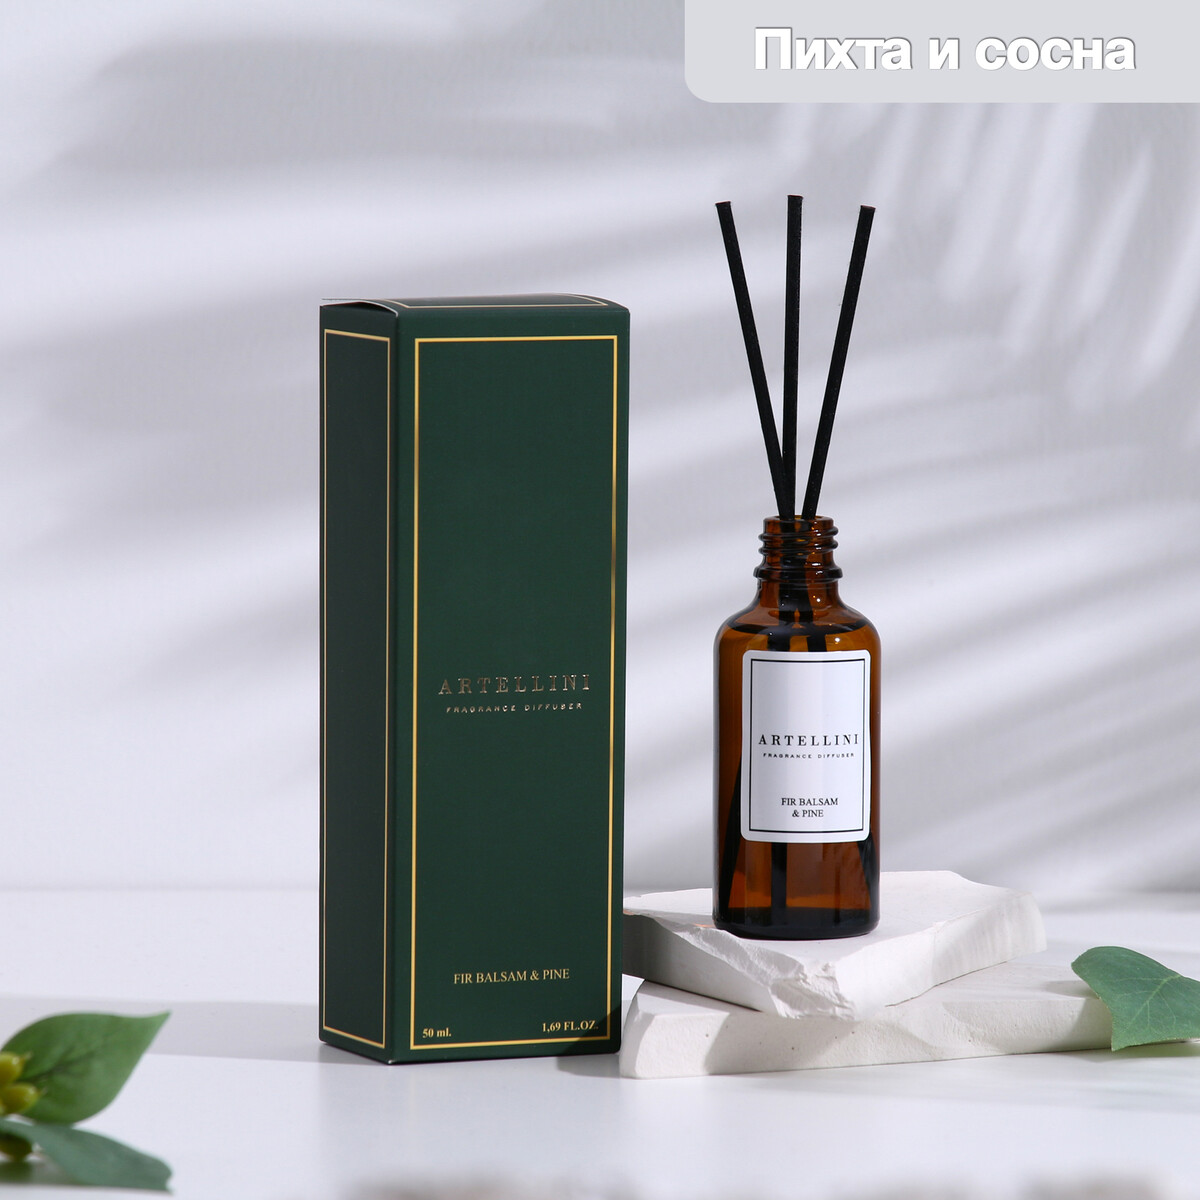 Диффузор ароматический artellini (50мл.) No brand